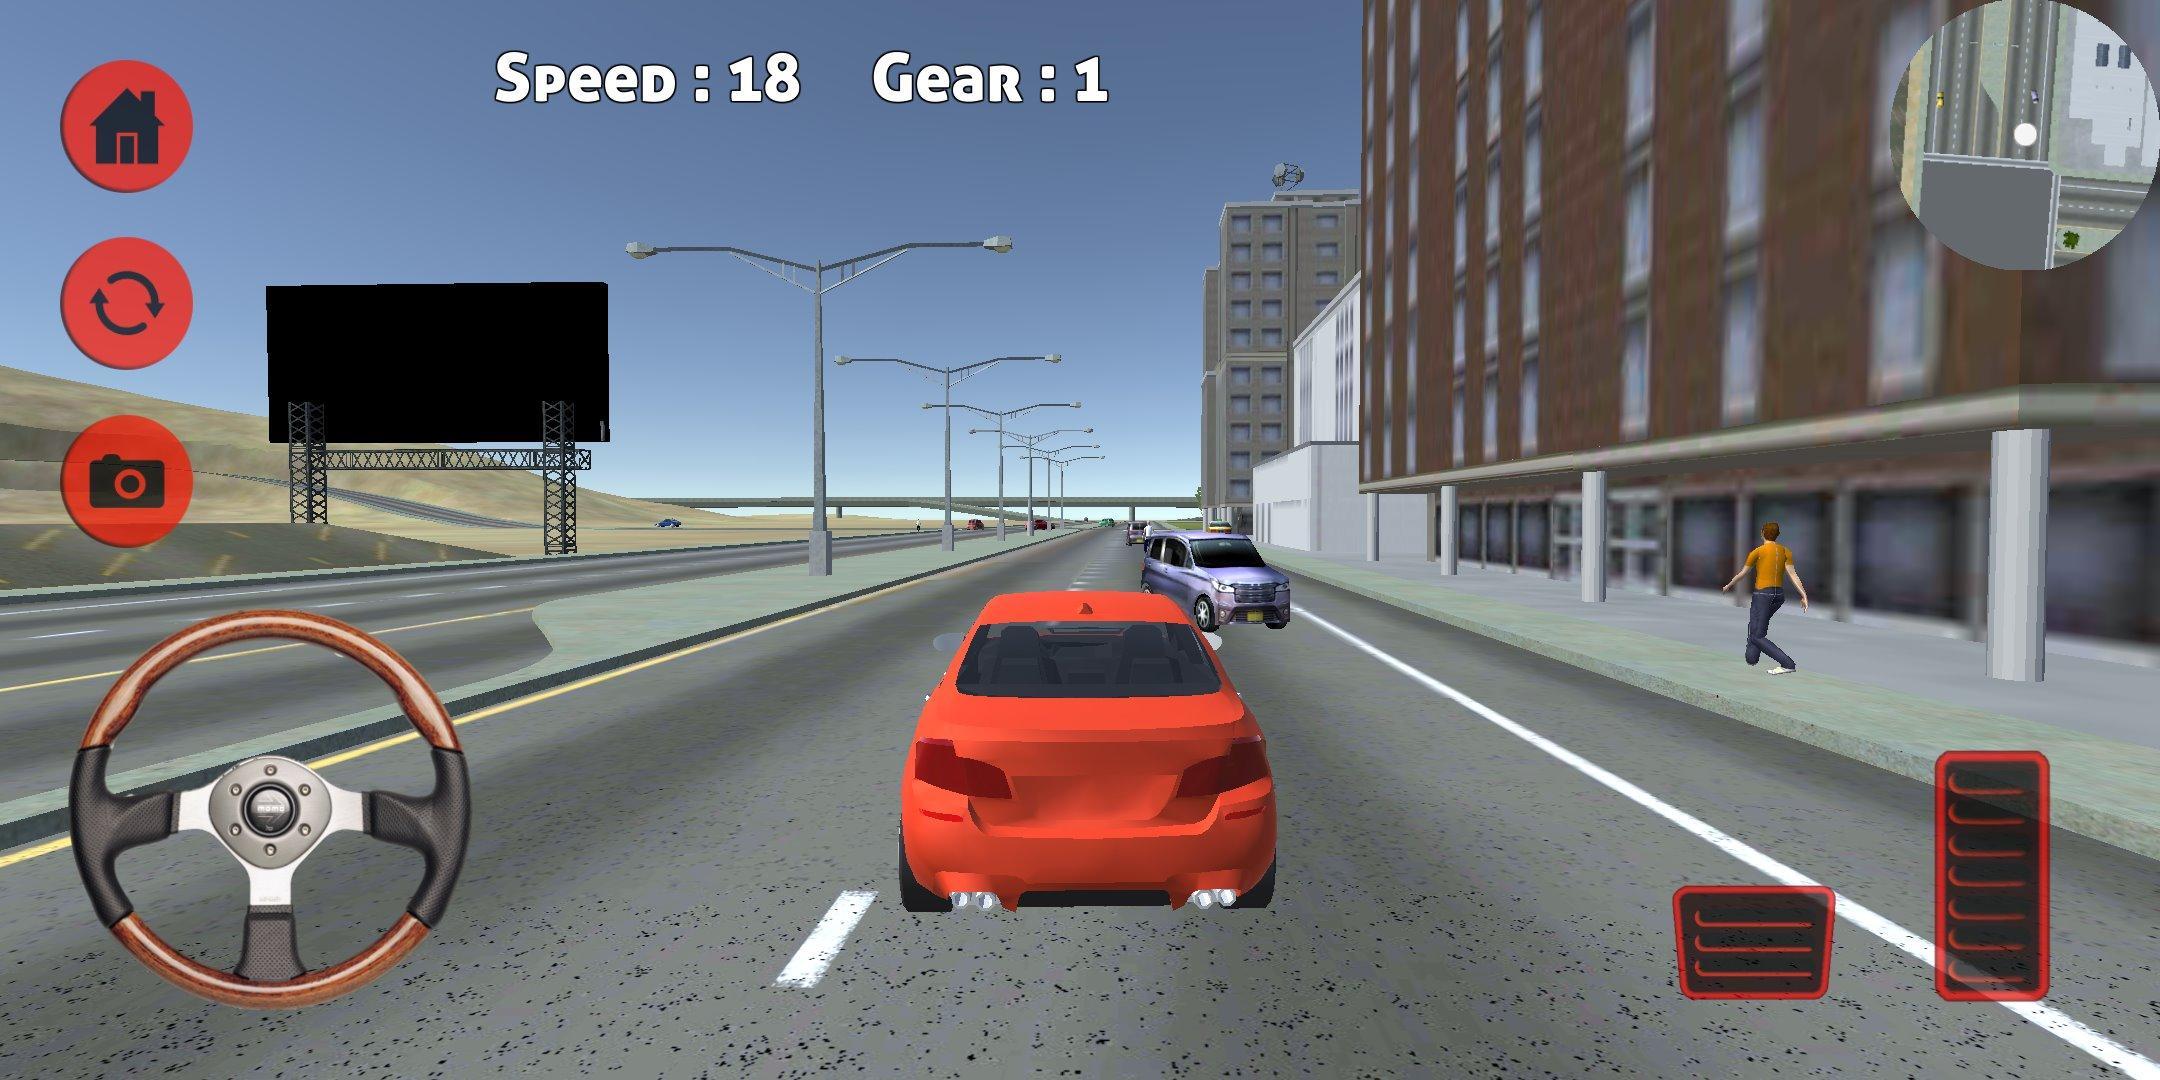 M5 E60 Driving Simulator 1.1 Screenshot 13